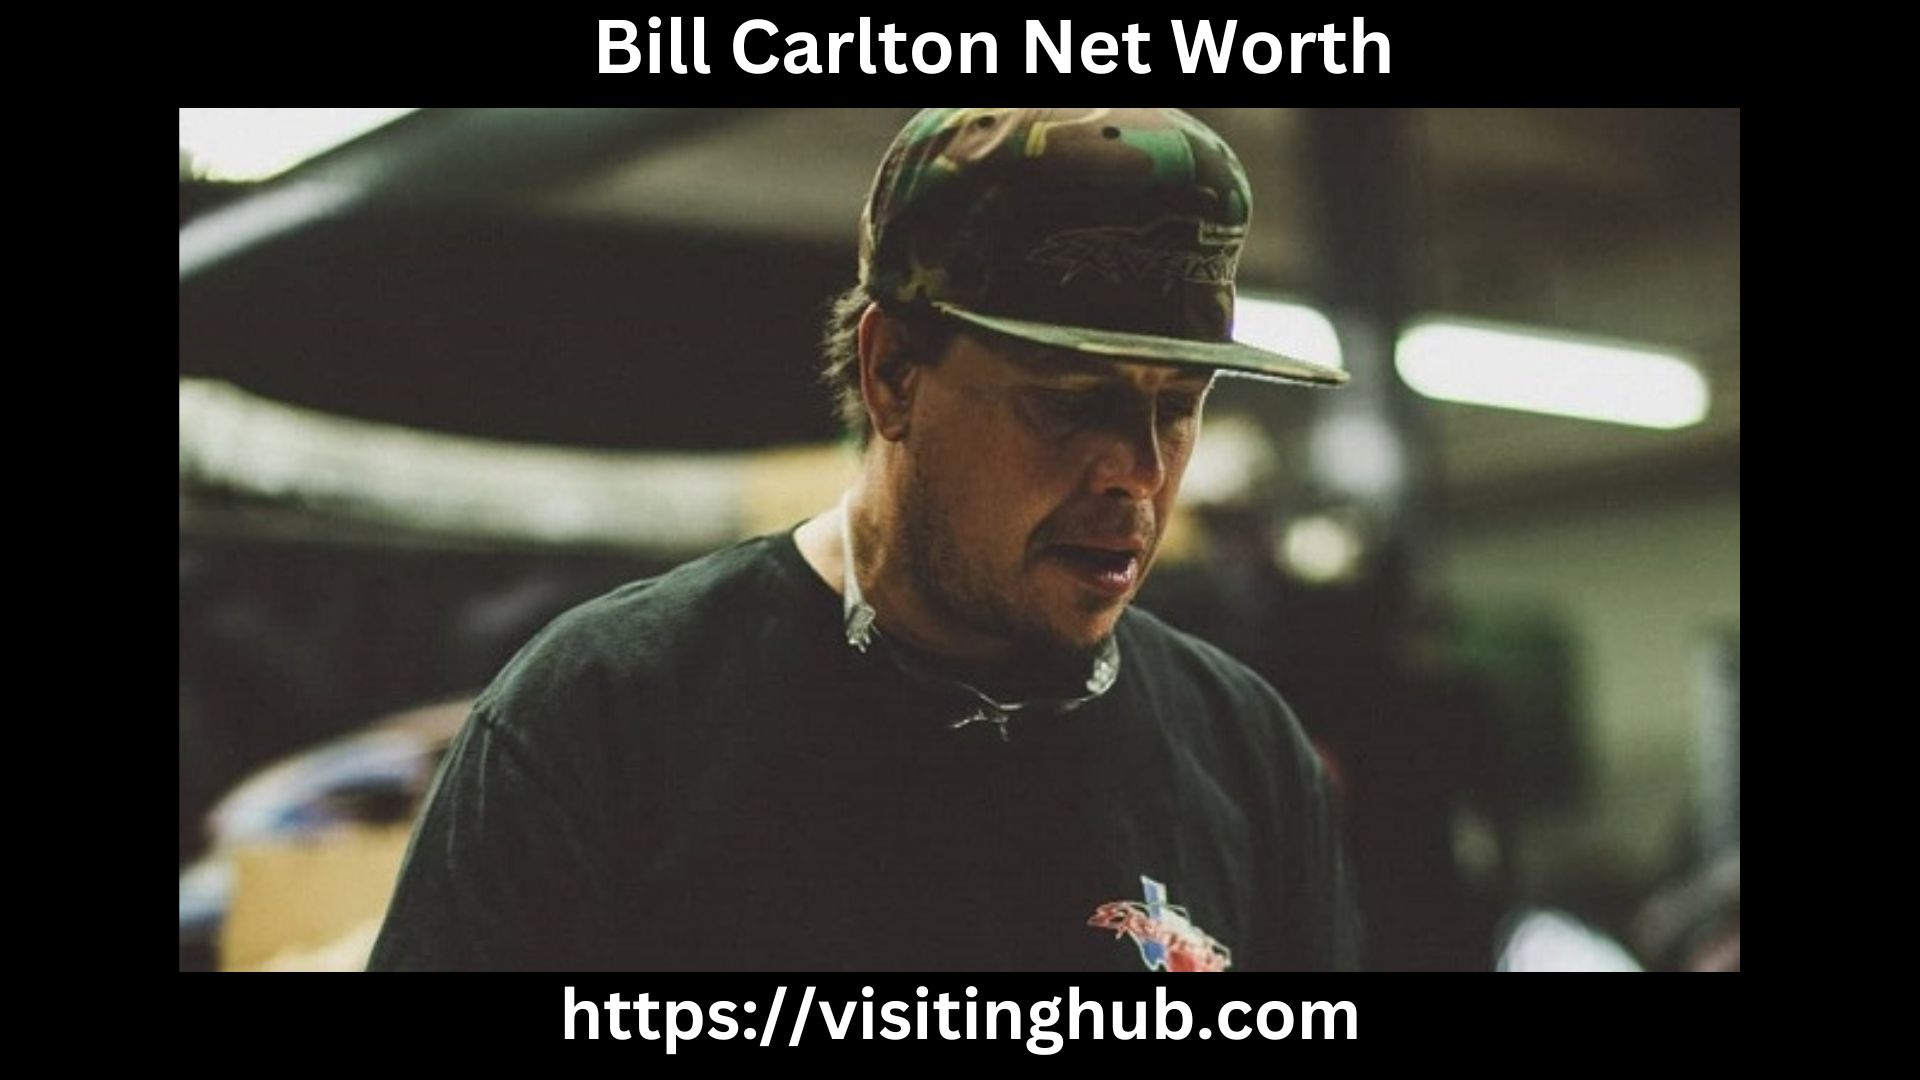 Bill Carlton Net Worth